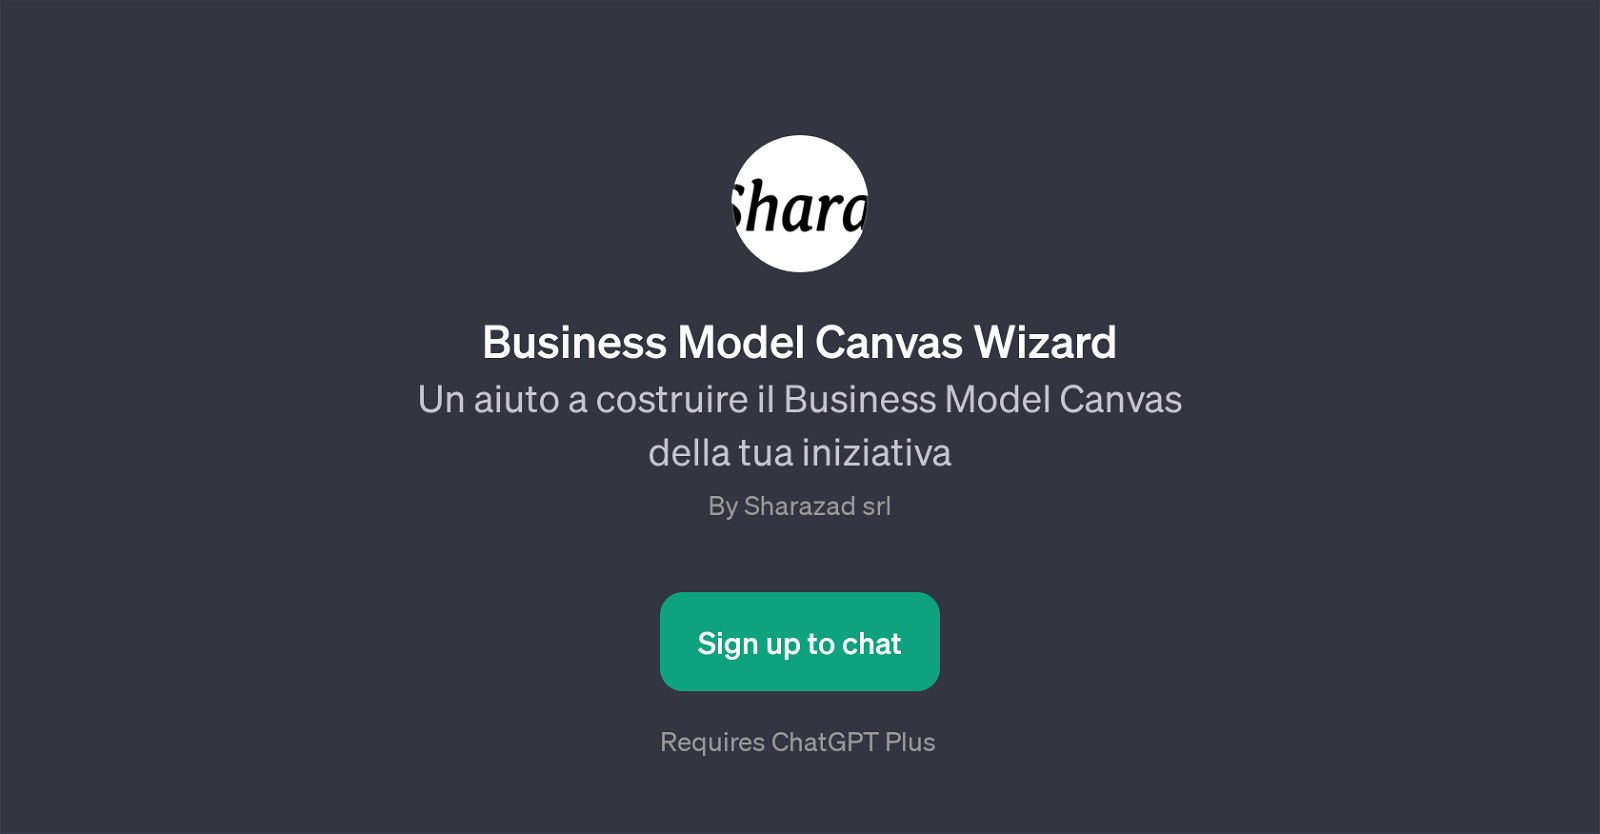 Business Model Canvas Wizard website